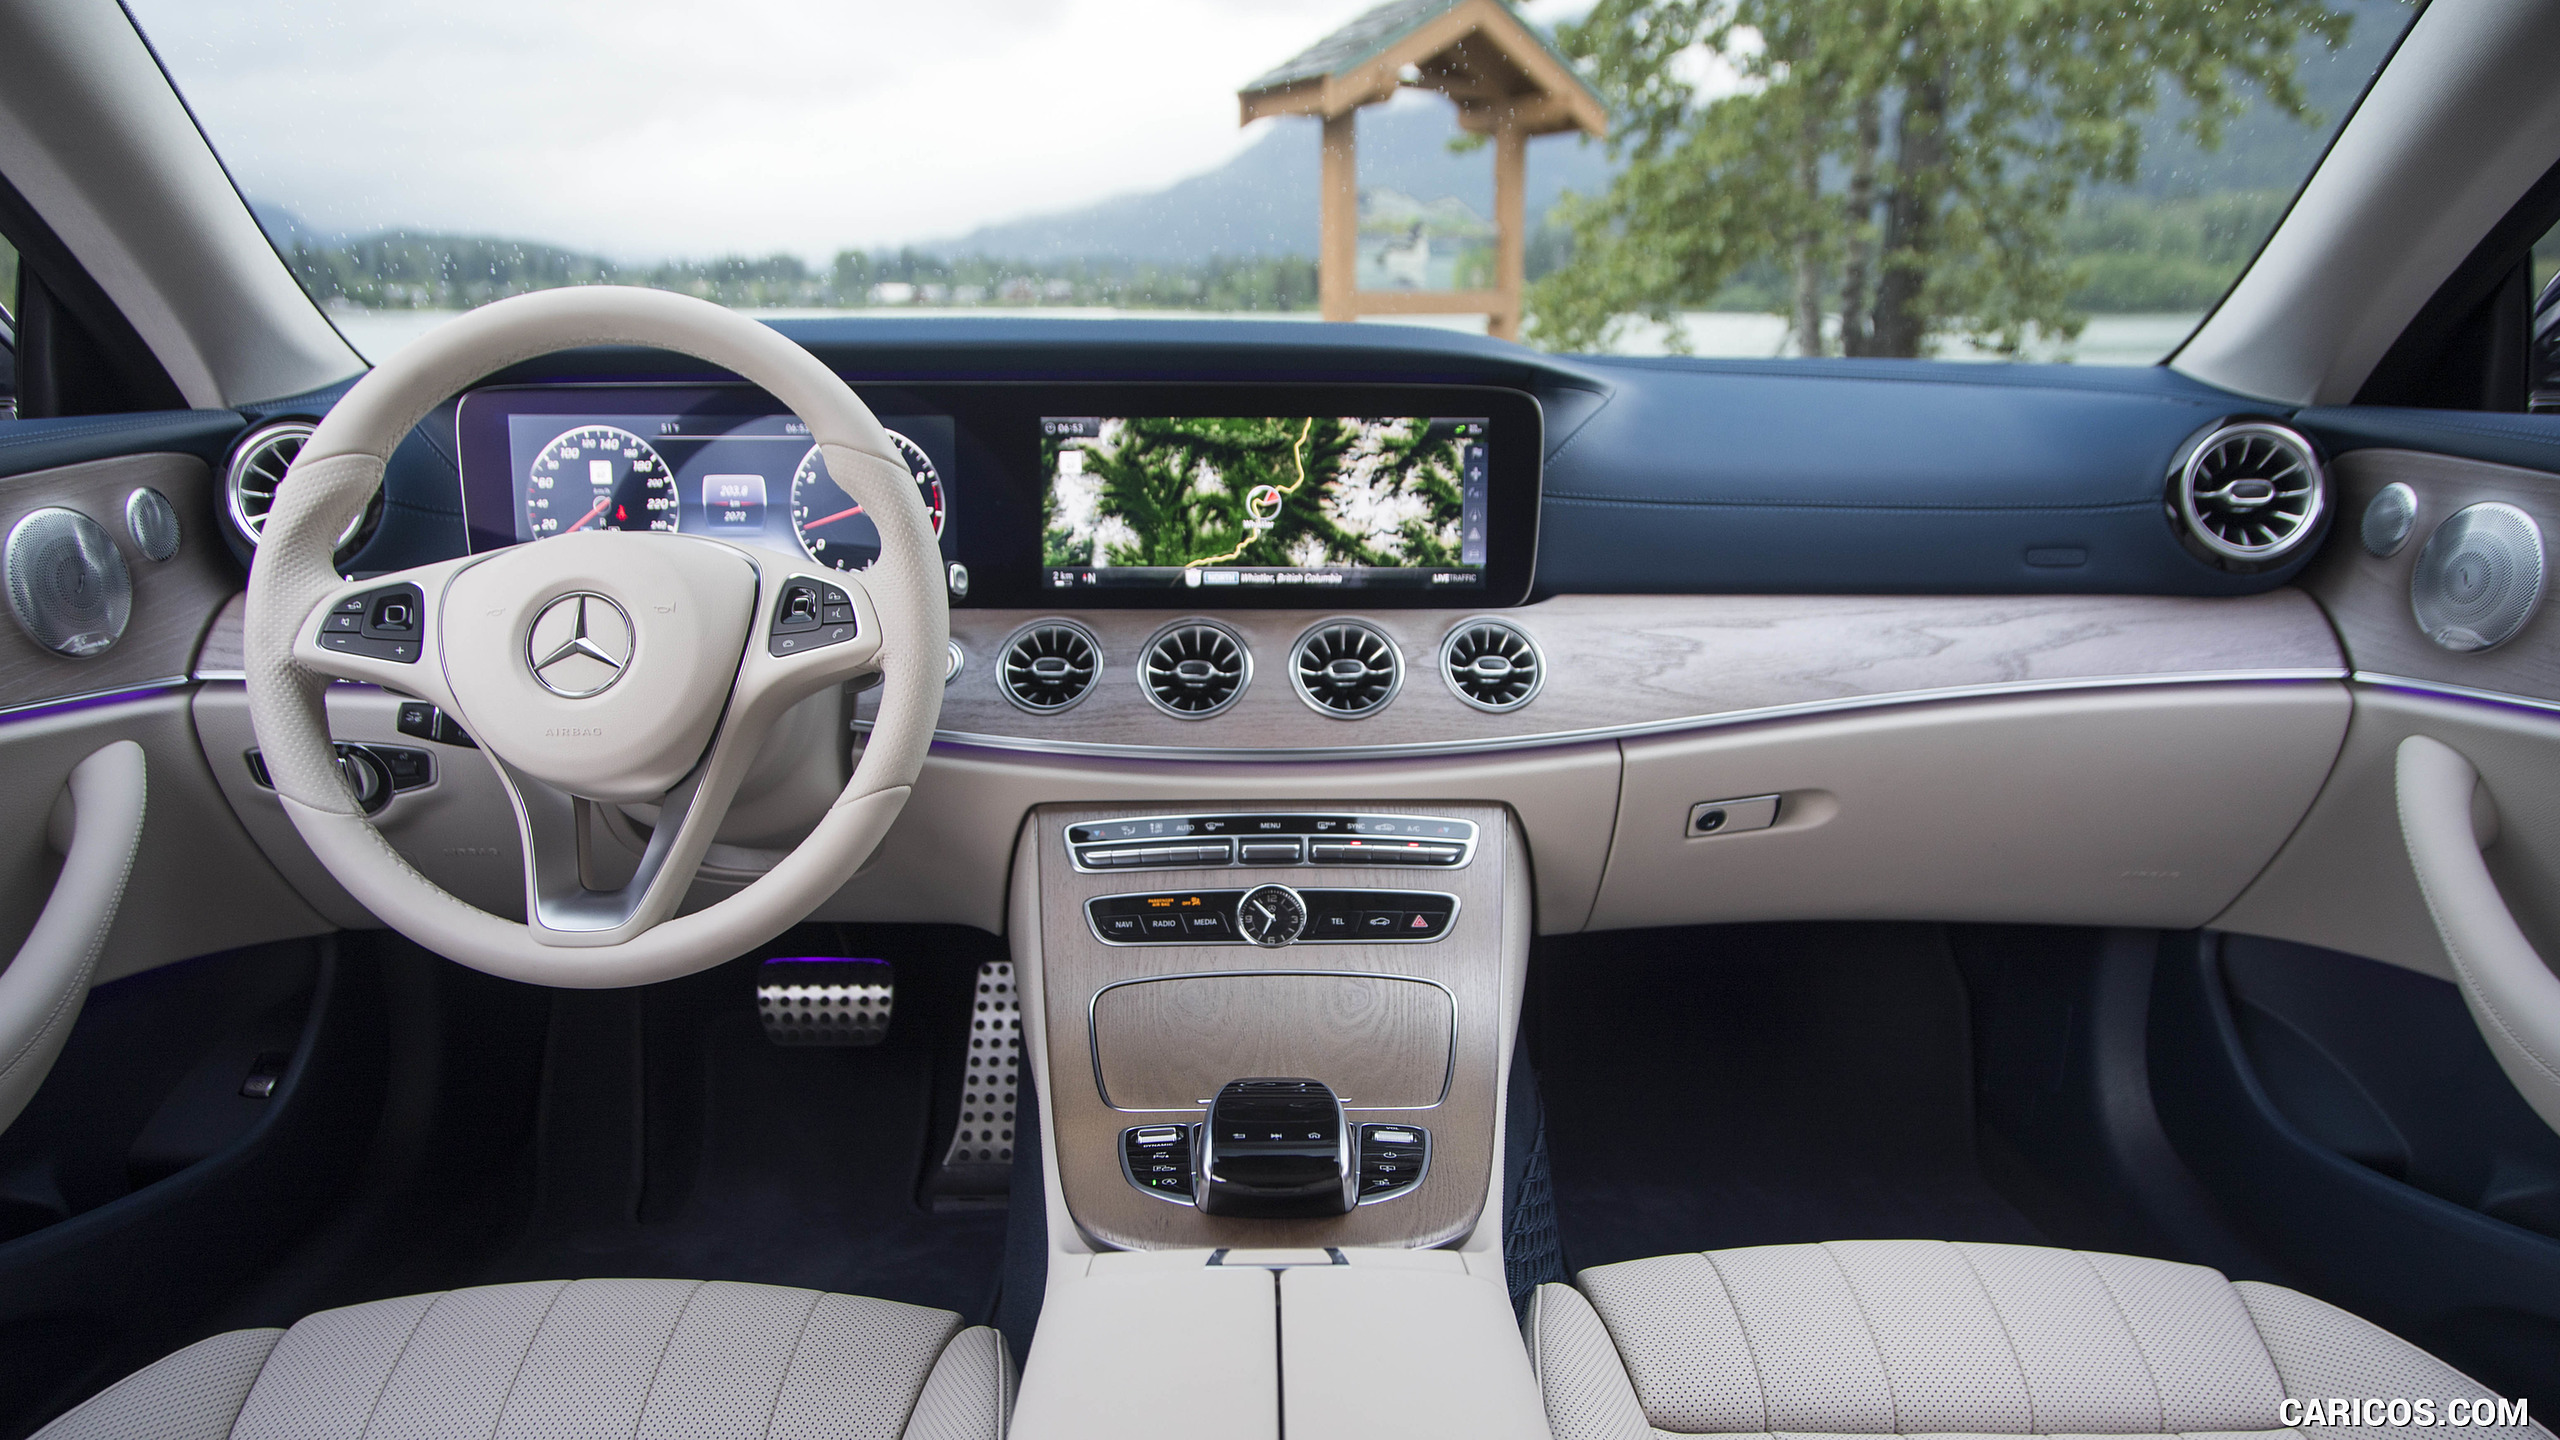 2018 Mercedes-Benz E-Class E400 4MATIC Coupe (US-Spec) - Interior, Cockpit, #340 of 365